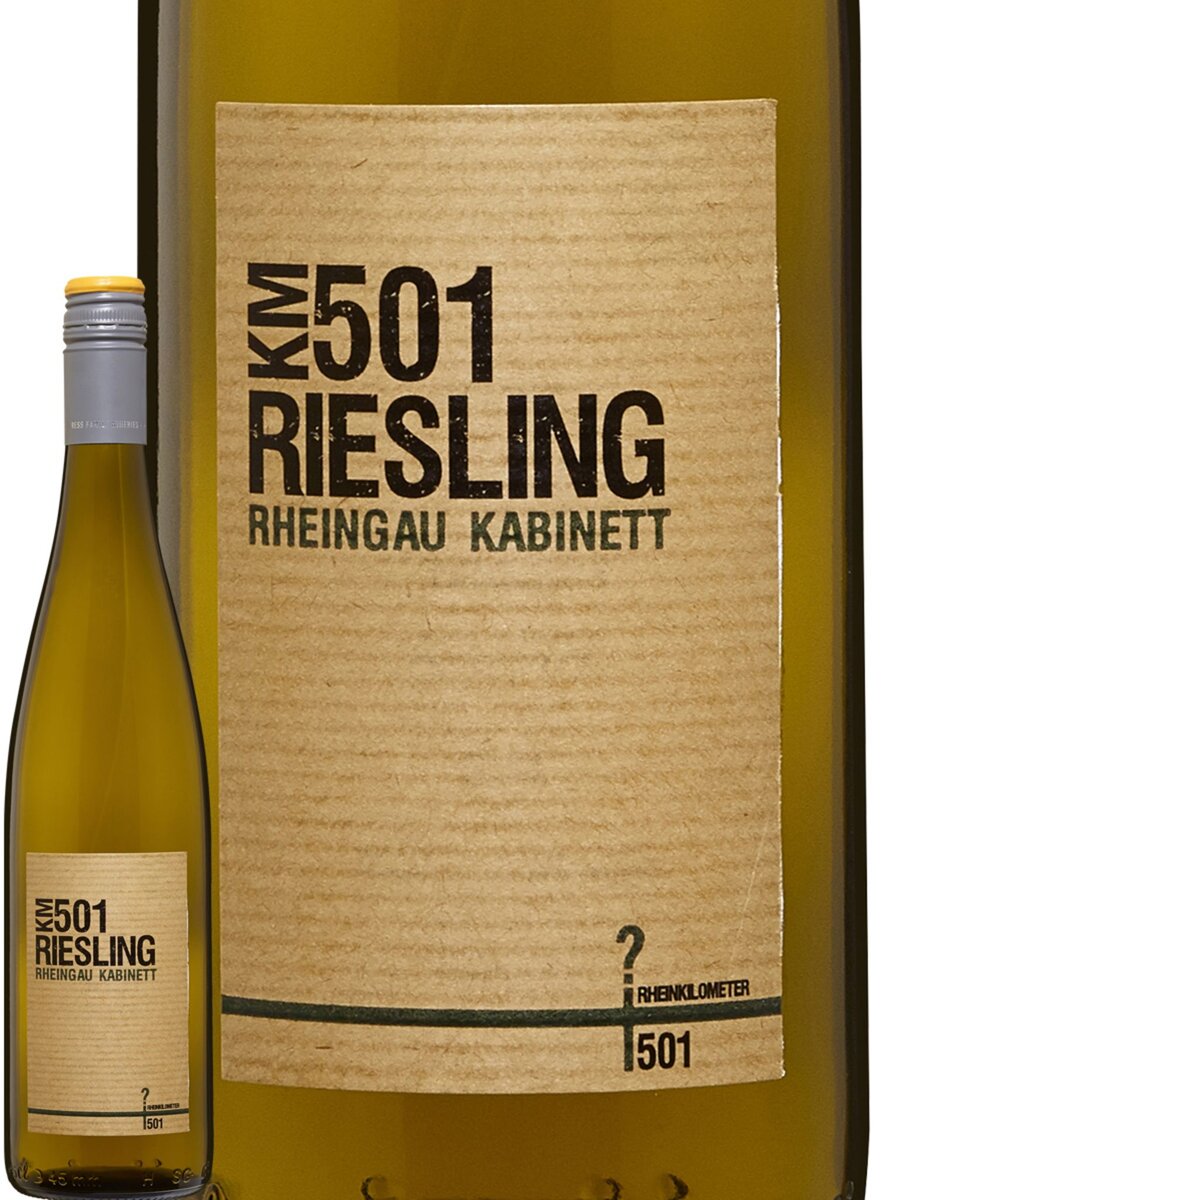 Riesling Kabinett KM501 Rheingau Riesling 2014